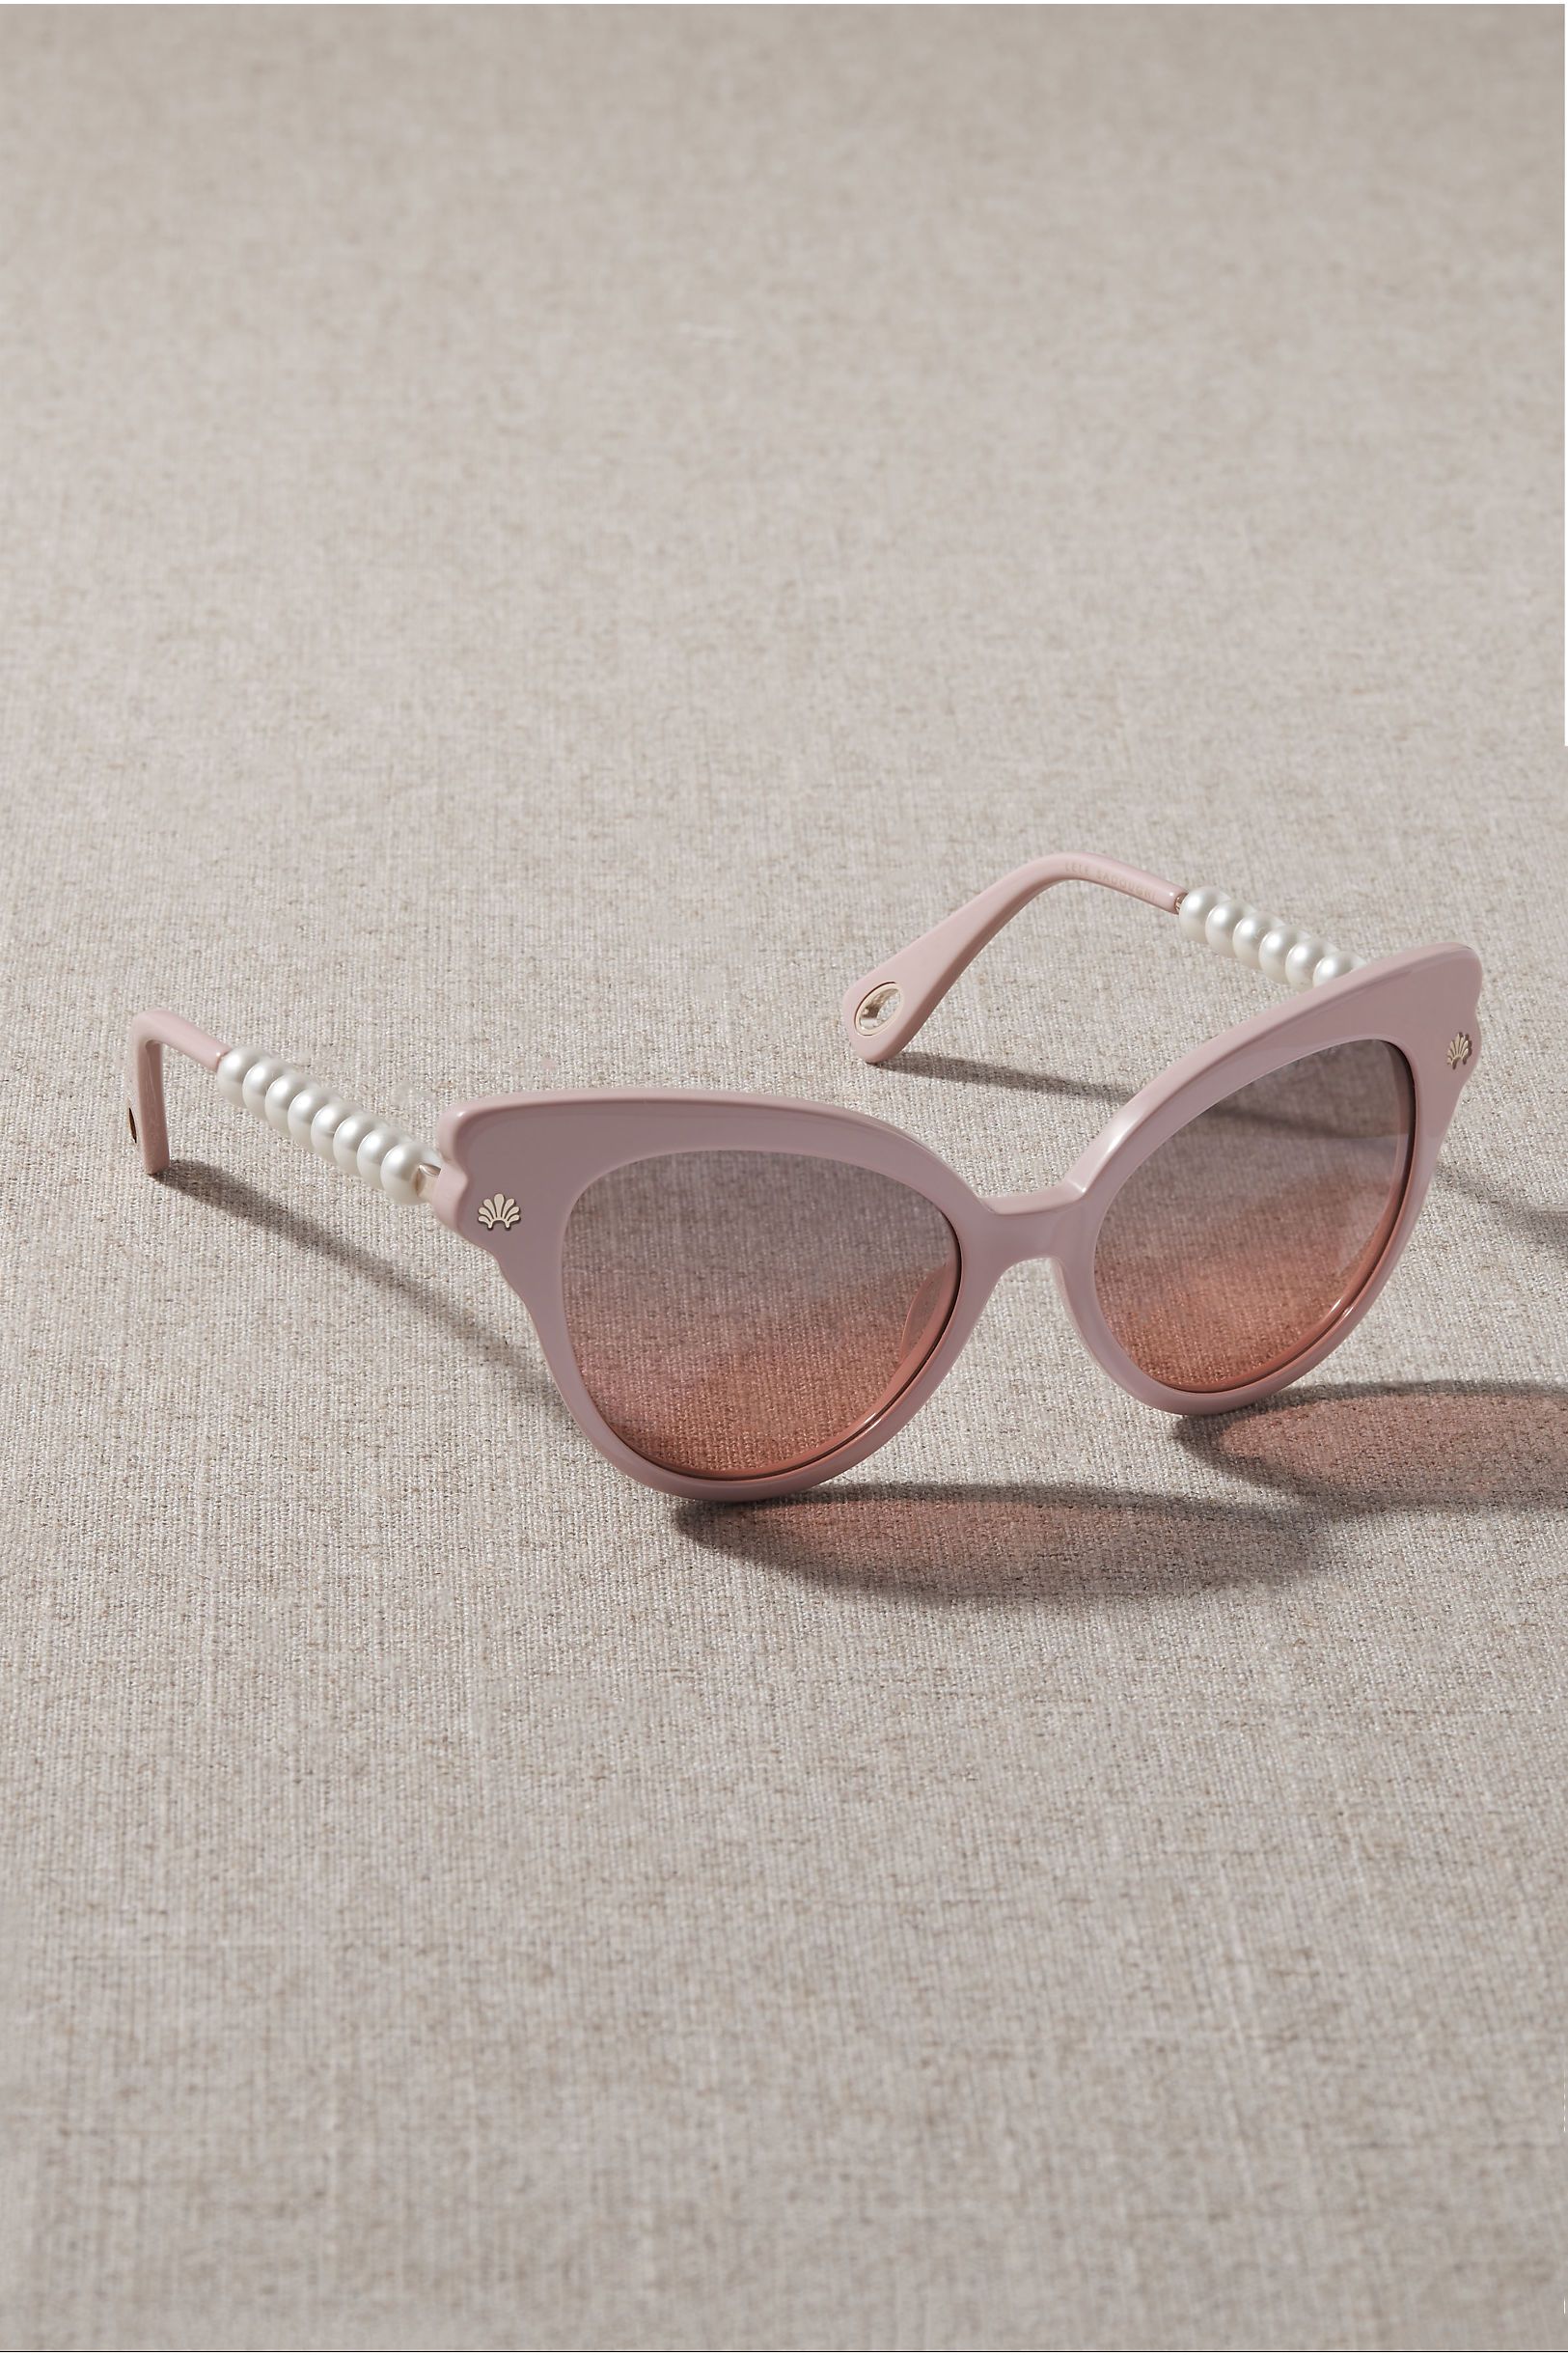 BHLDN's Lele Sadoughi Lele Sadoughi Blush Chelsea Sunglasses in Pink | BHLDN